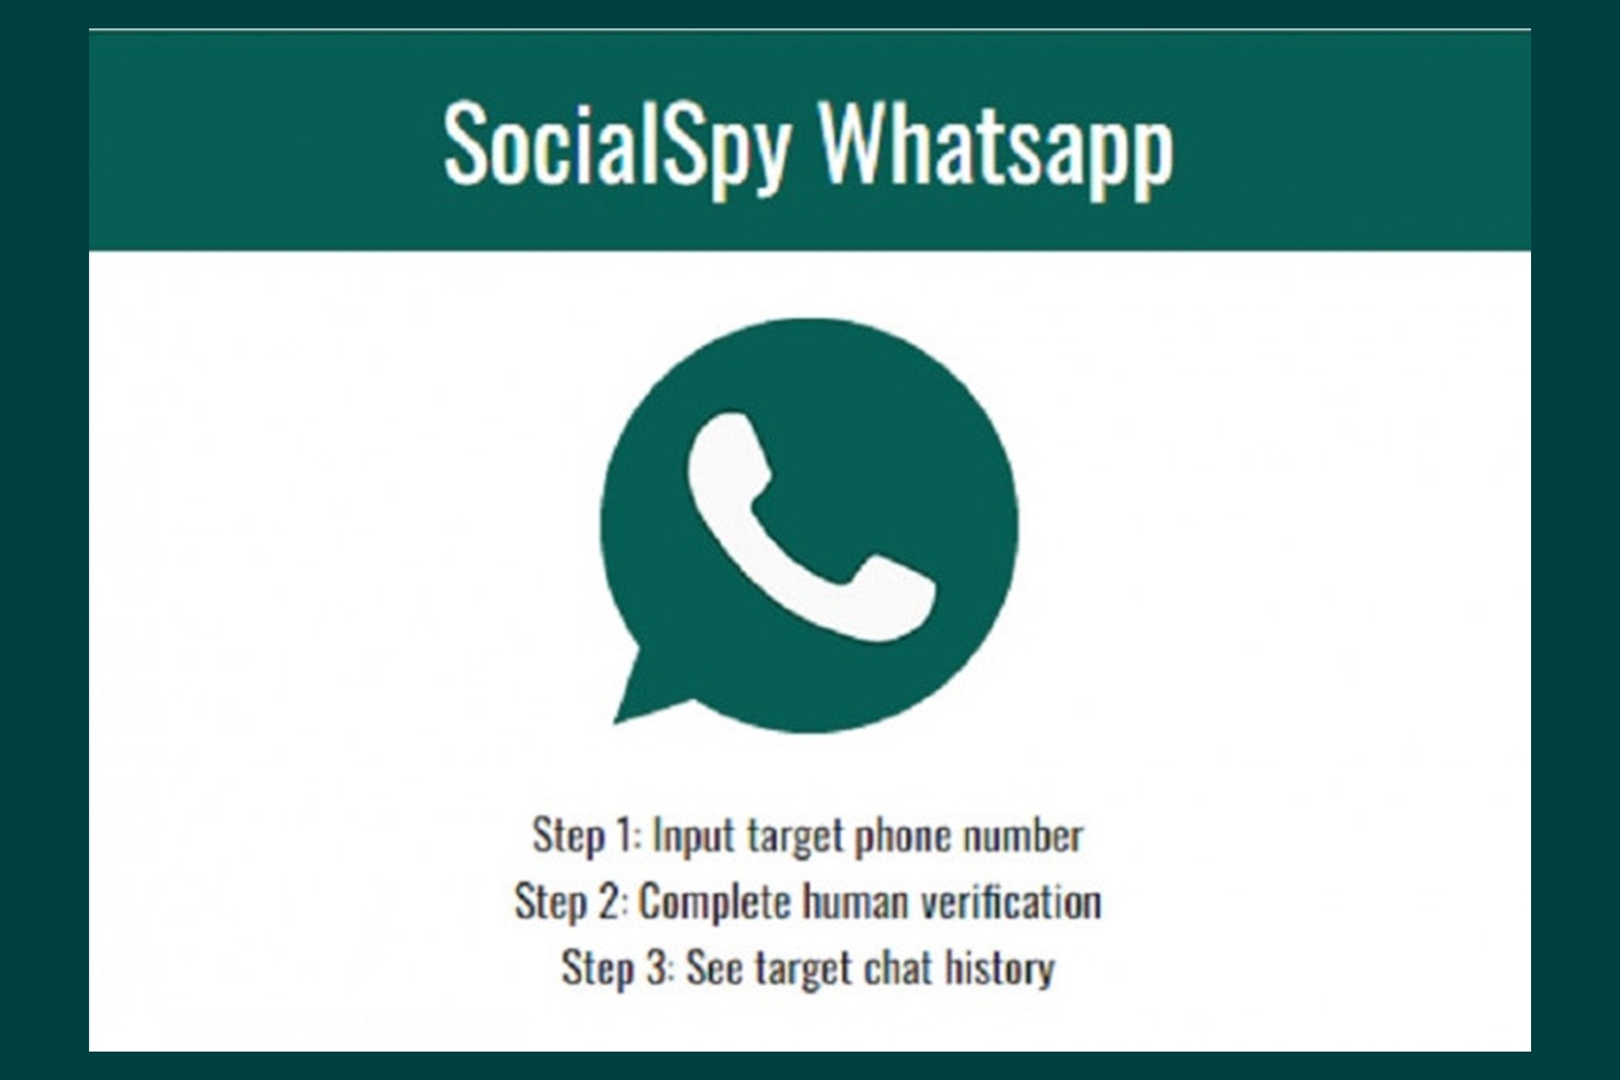 Intip WA Pacar Pakai Social Spy WhatsApp, Tanpa Ketahuan Pasti Berhasil!